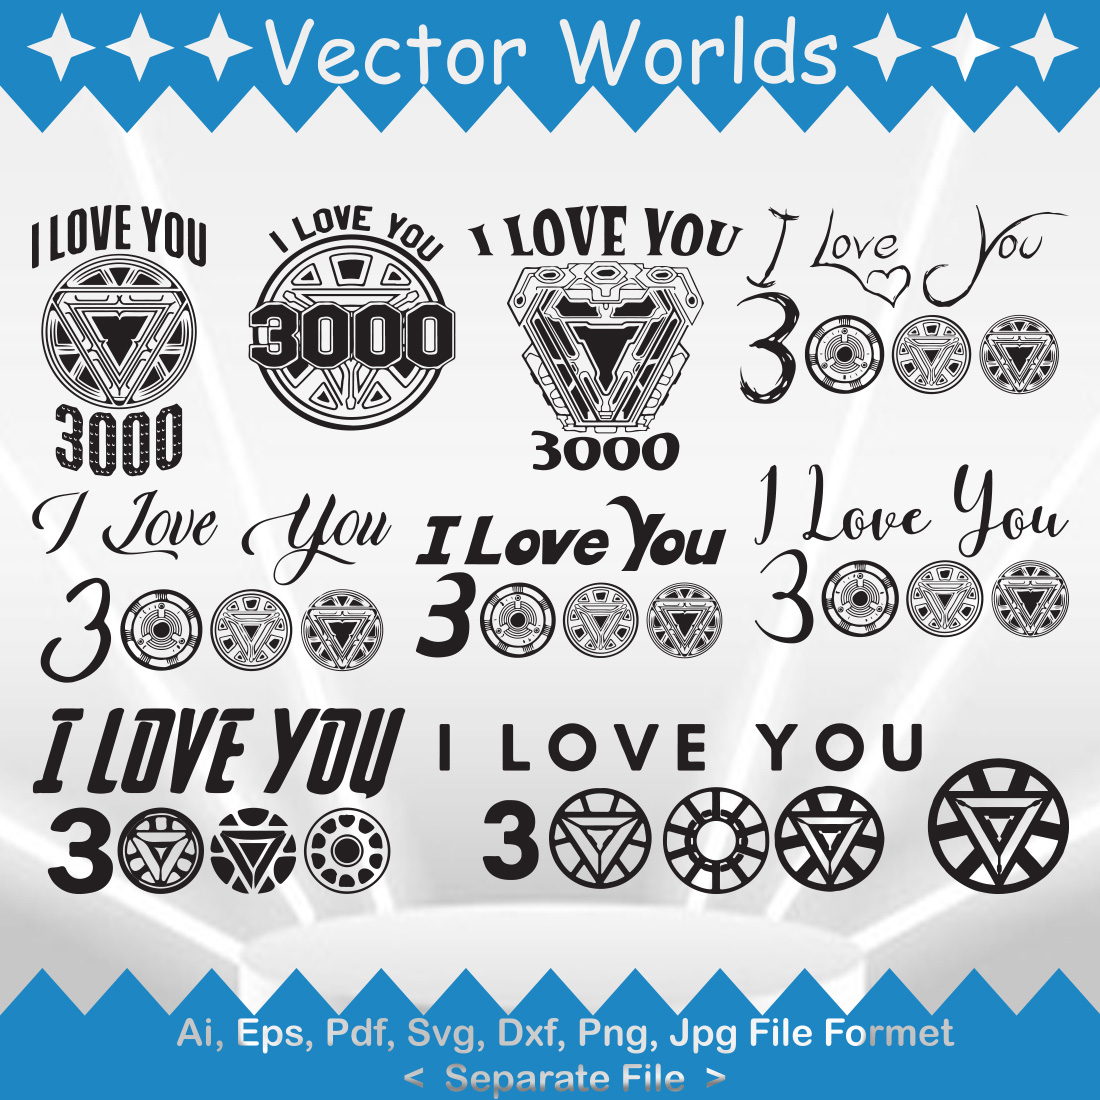 I Love You 3000 SVG Vector Design cover image.